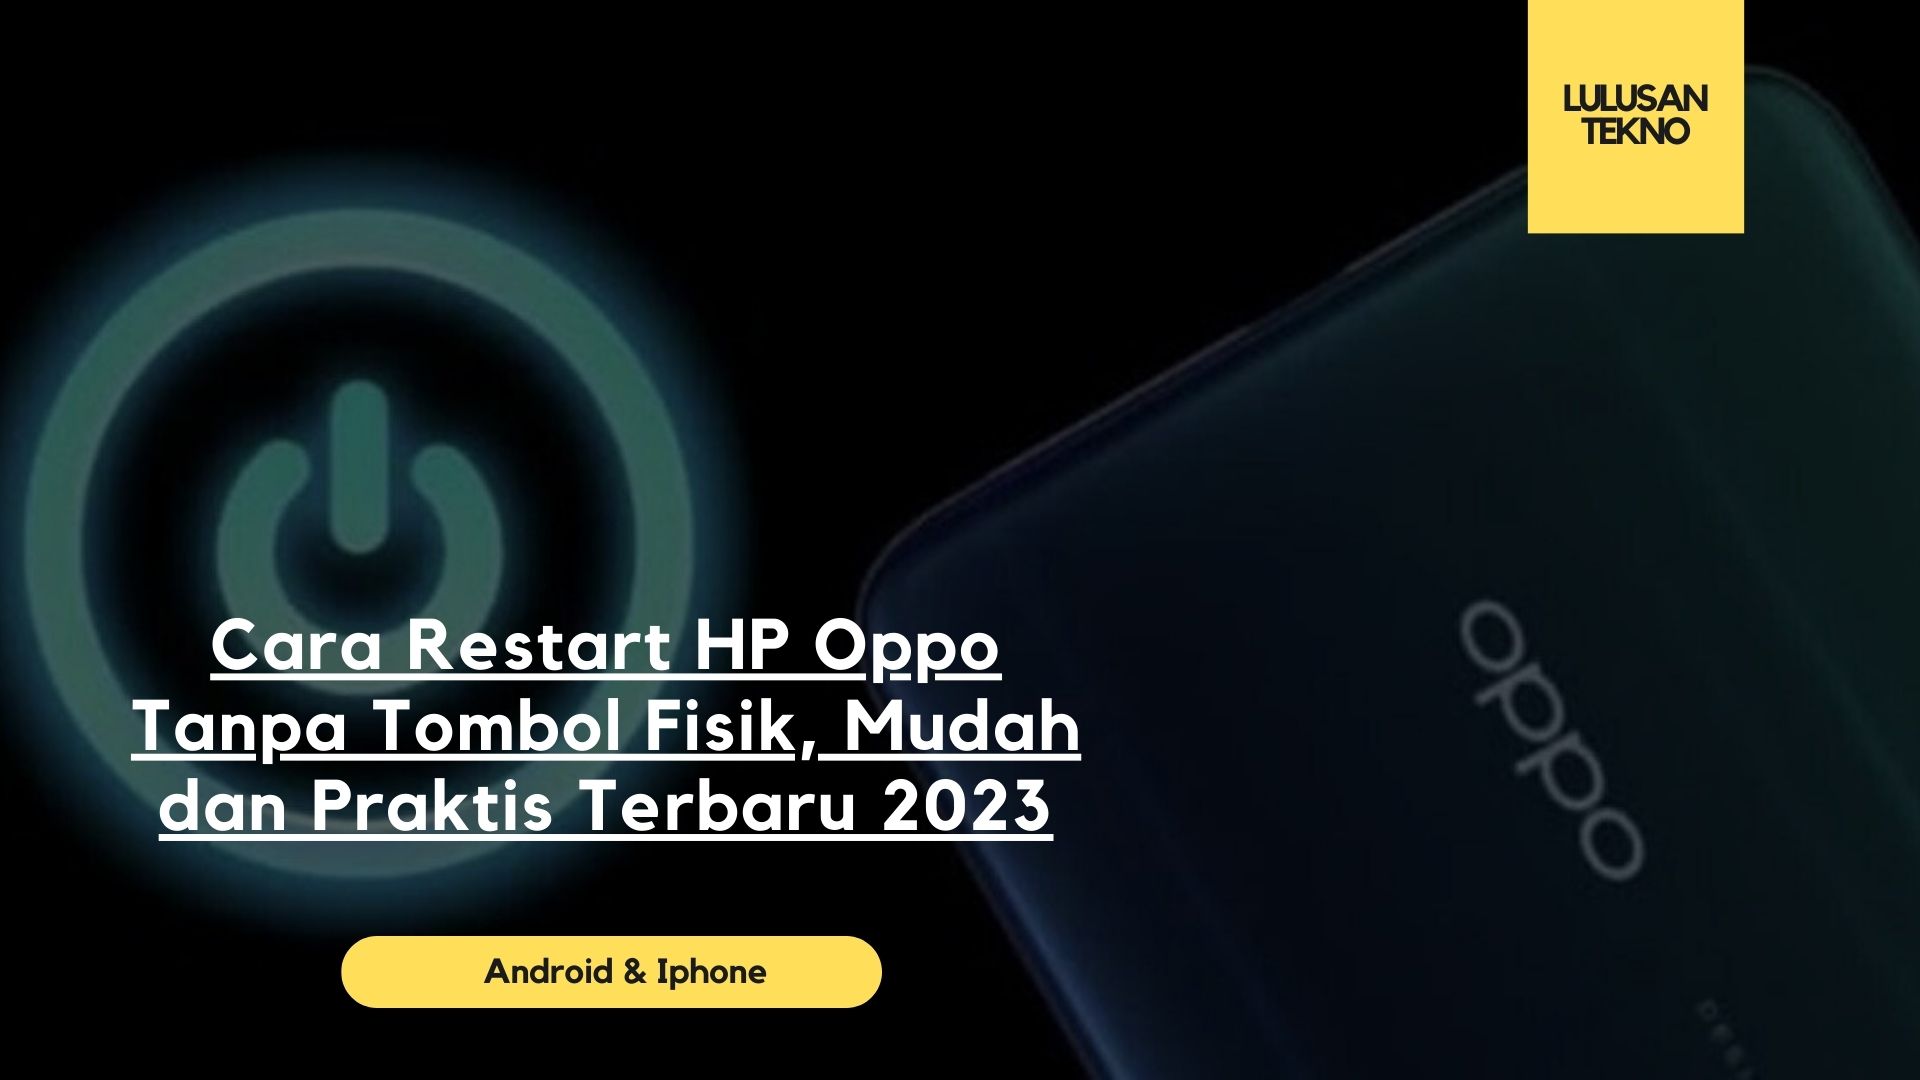 Cara Restart HP Oppo Tanpa Tombol Fisik, Mudahdan Praktis Terbaru 2023